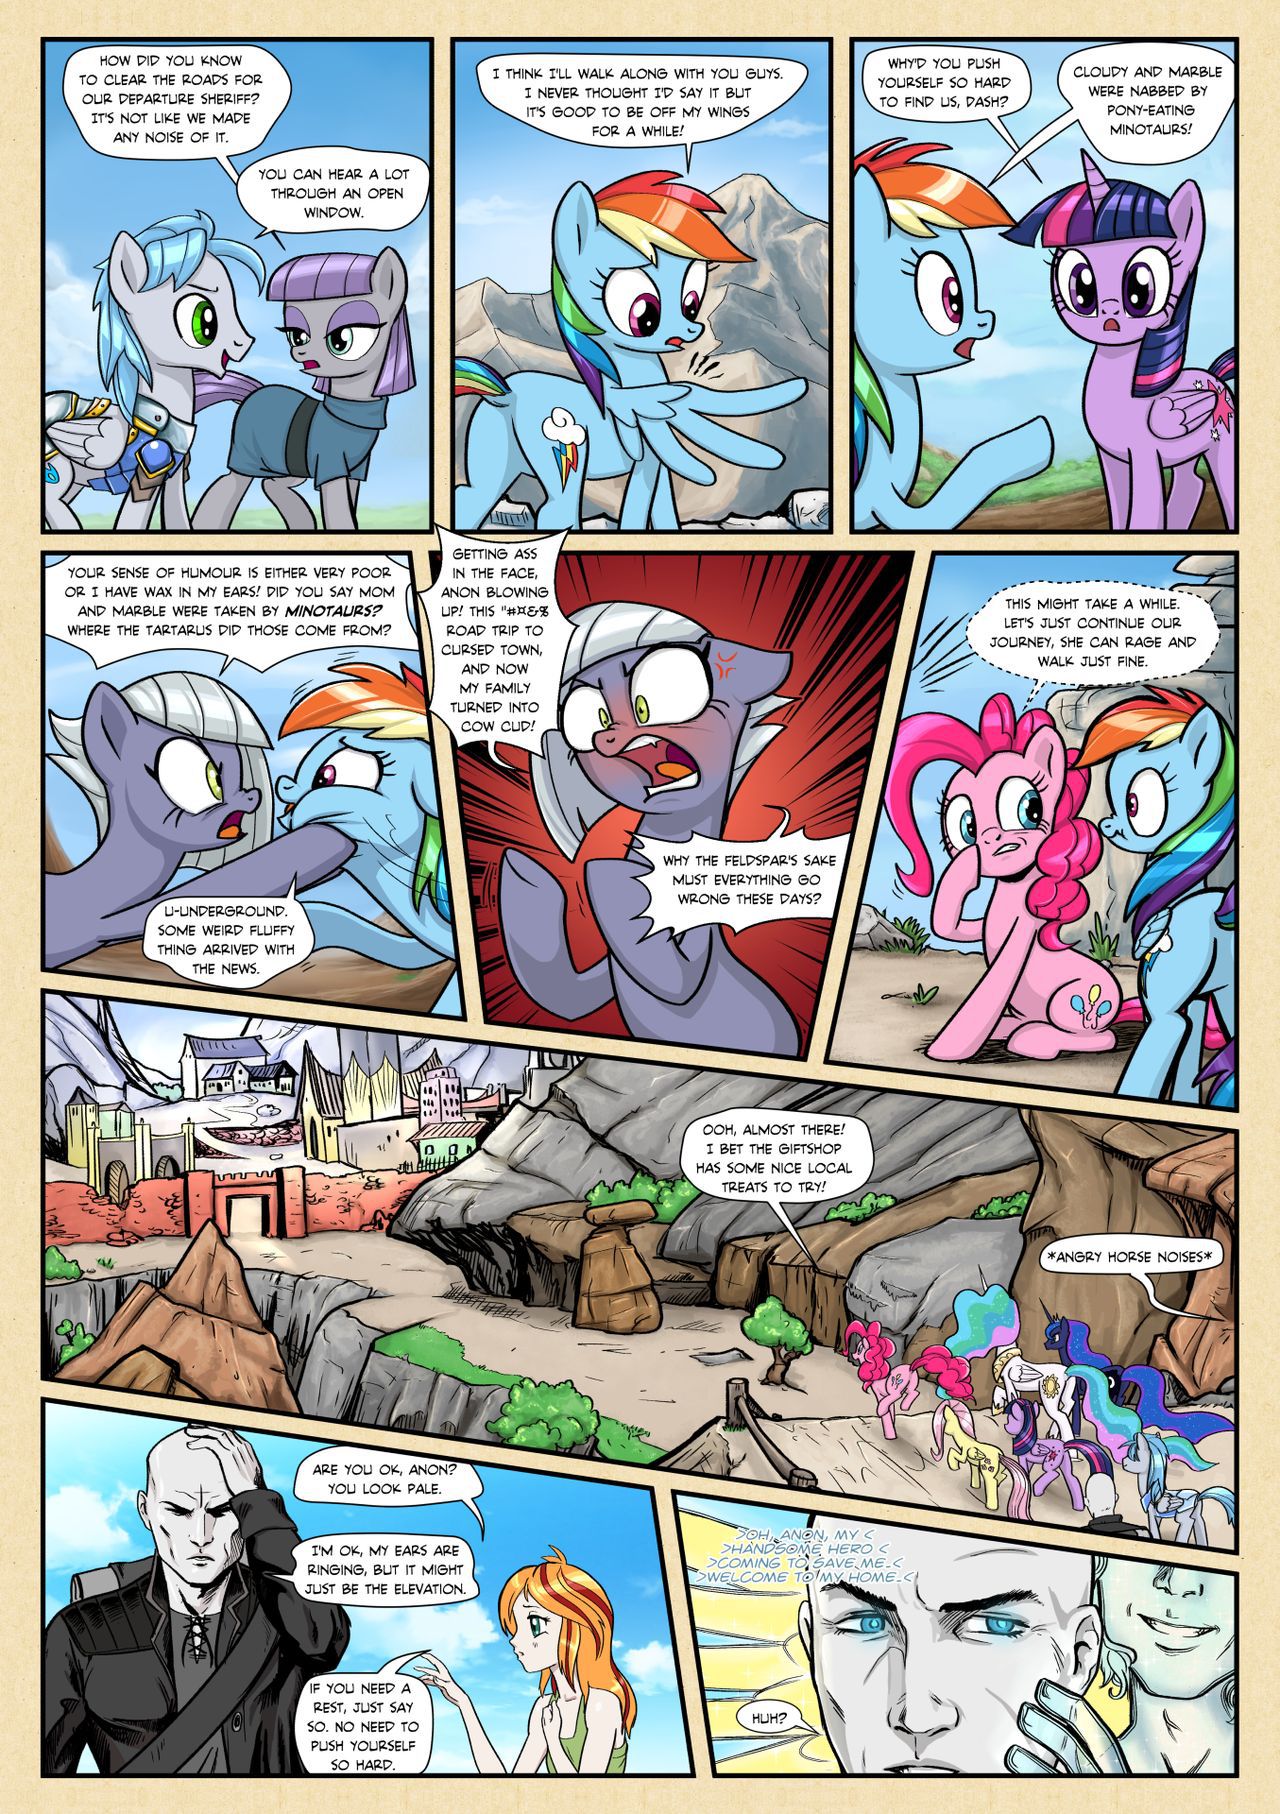 [Pencils] Anon's Pie Adventures (My Little Pony: Friendship is Magic) [In-Progress] 228